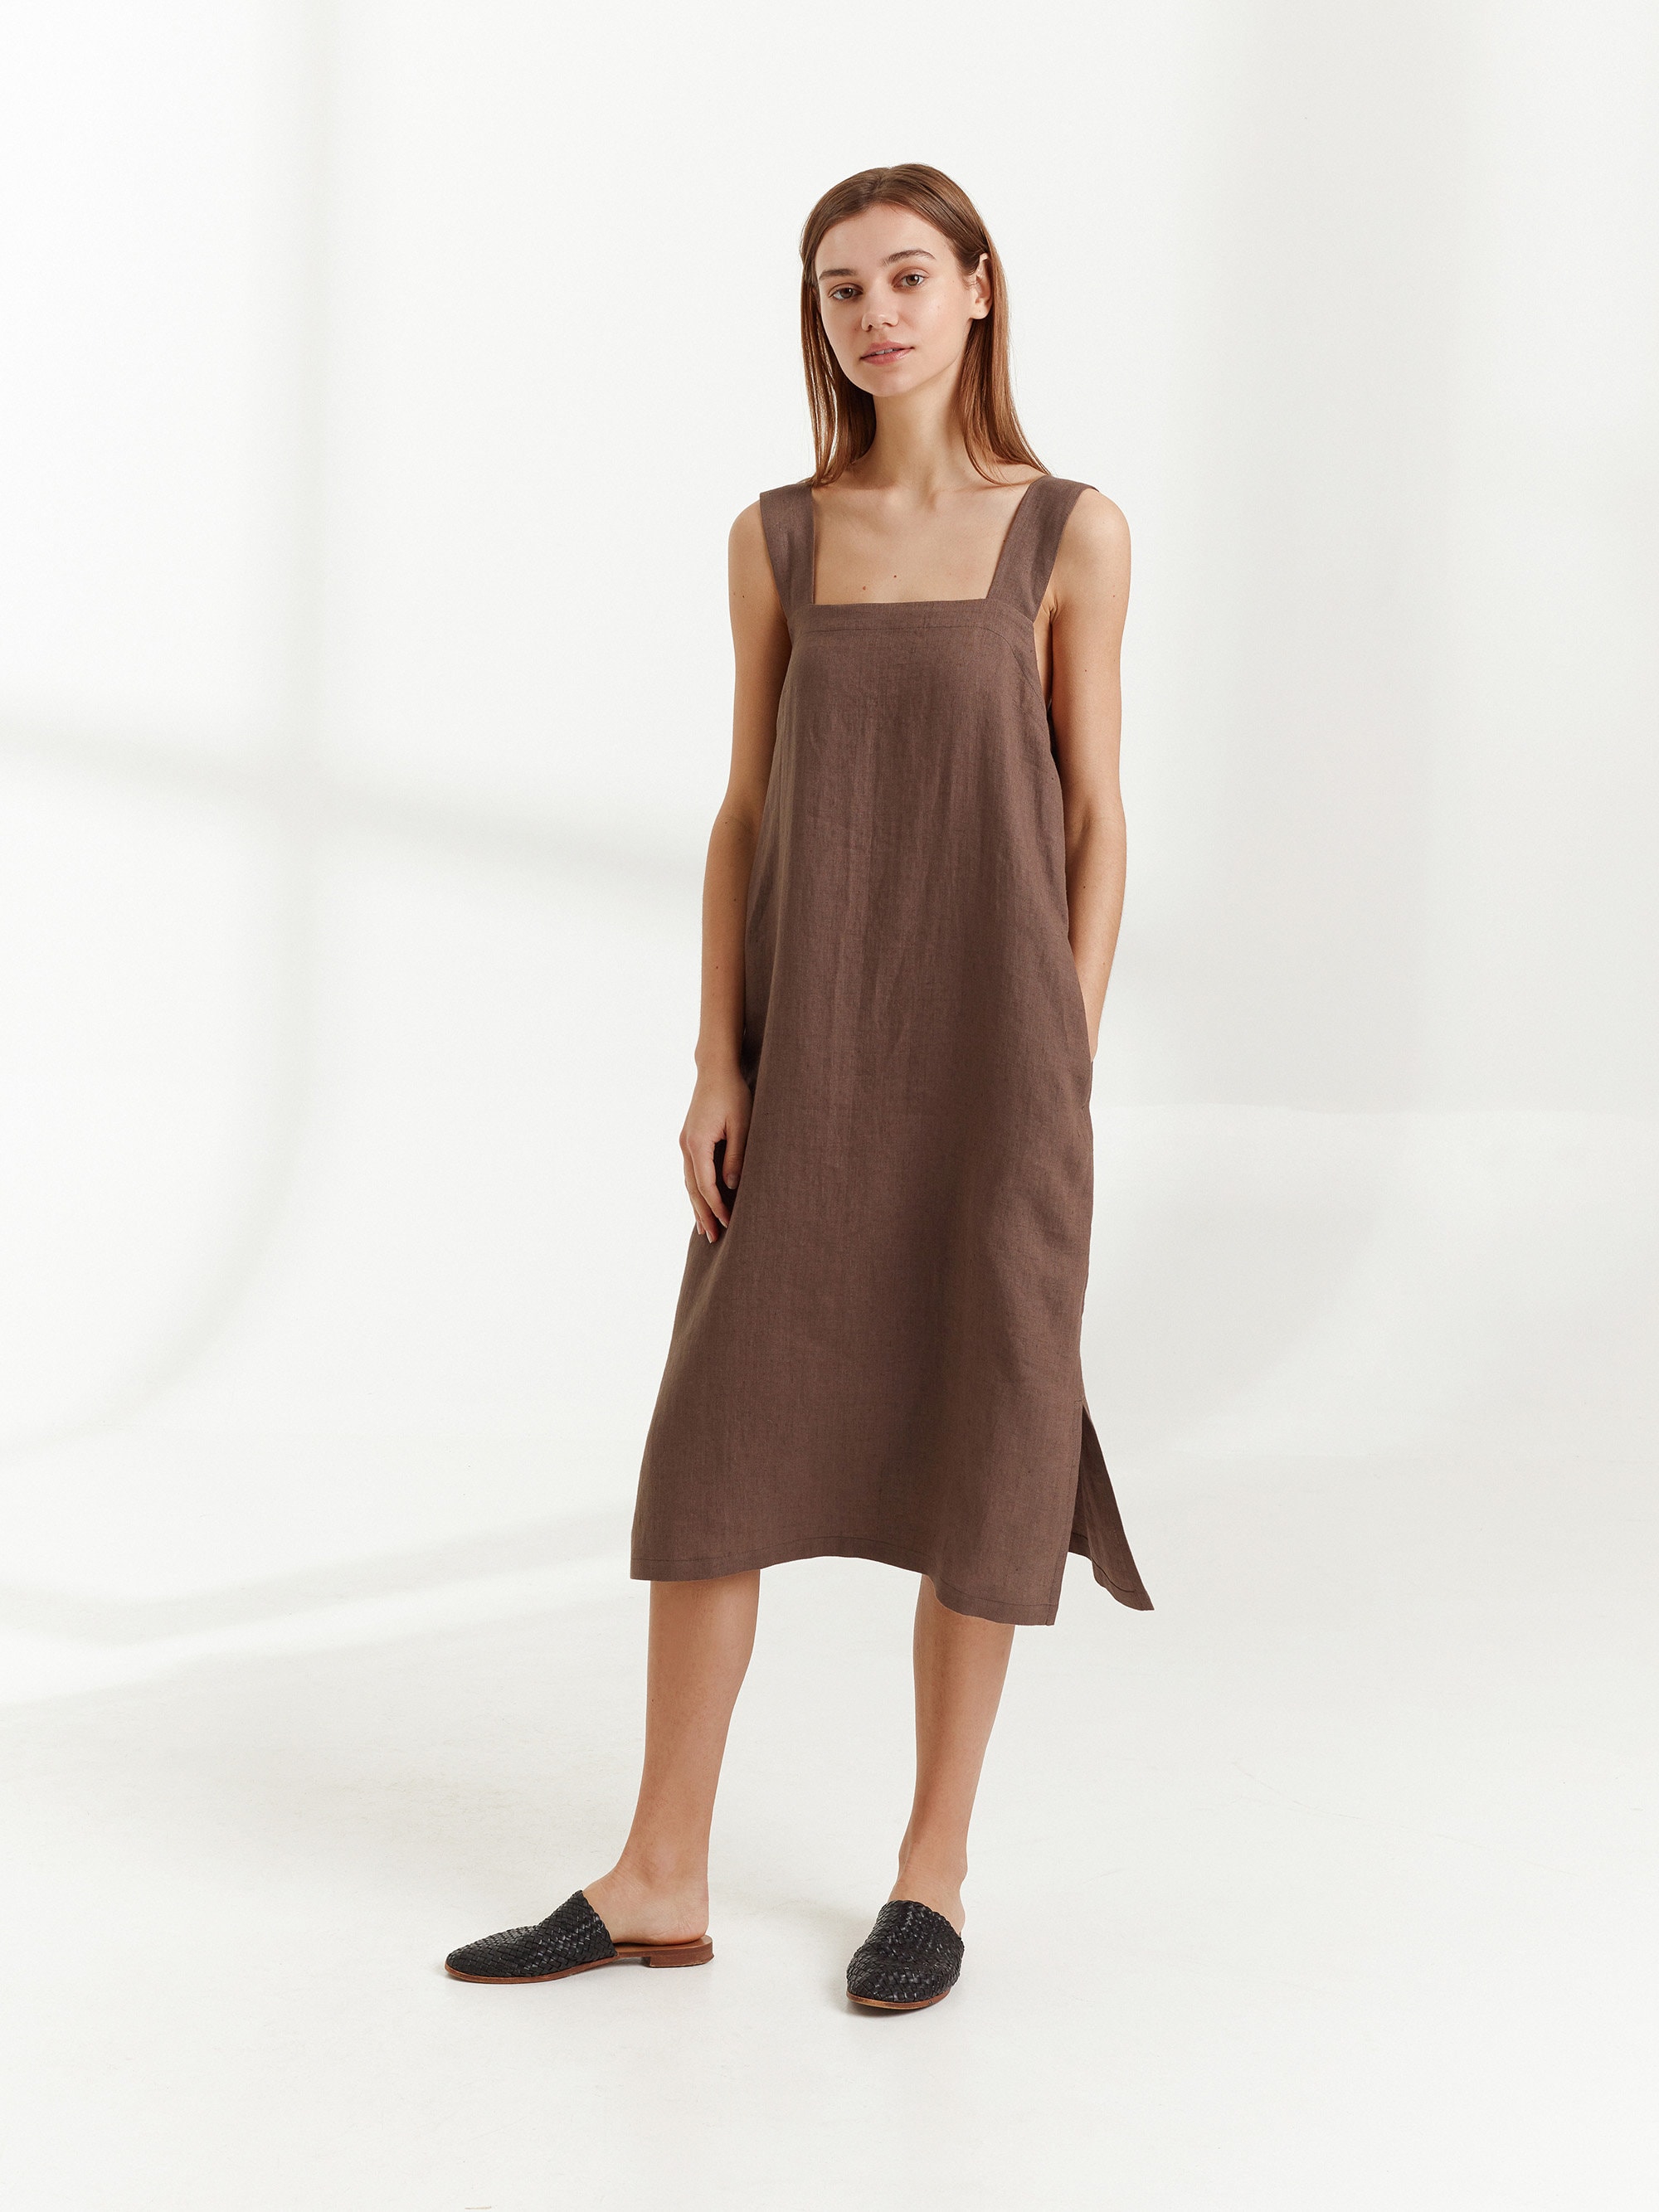 ELLIDY Linen Dress / Strap Summer Dress in Cocoa | Etsy